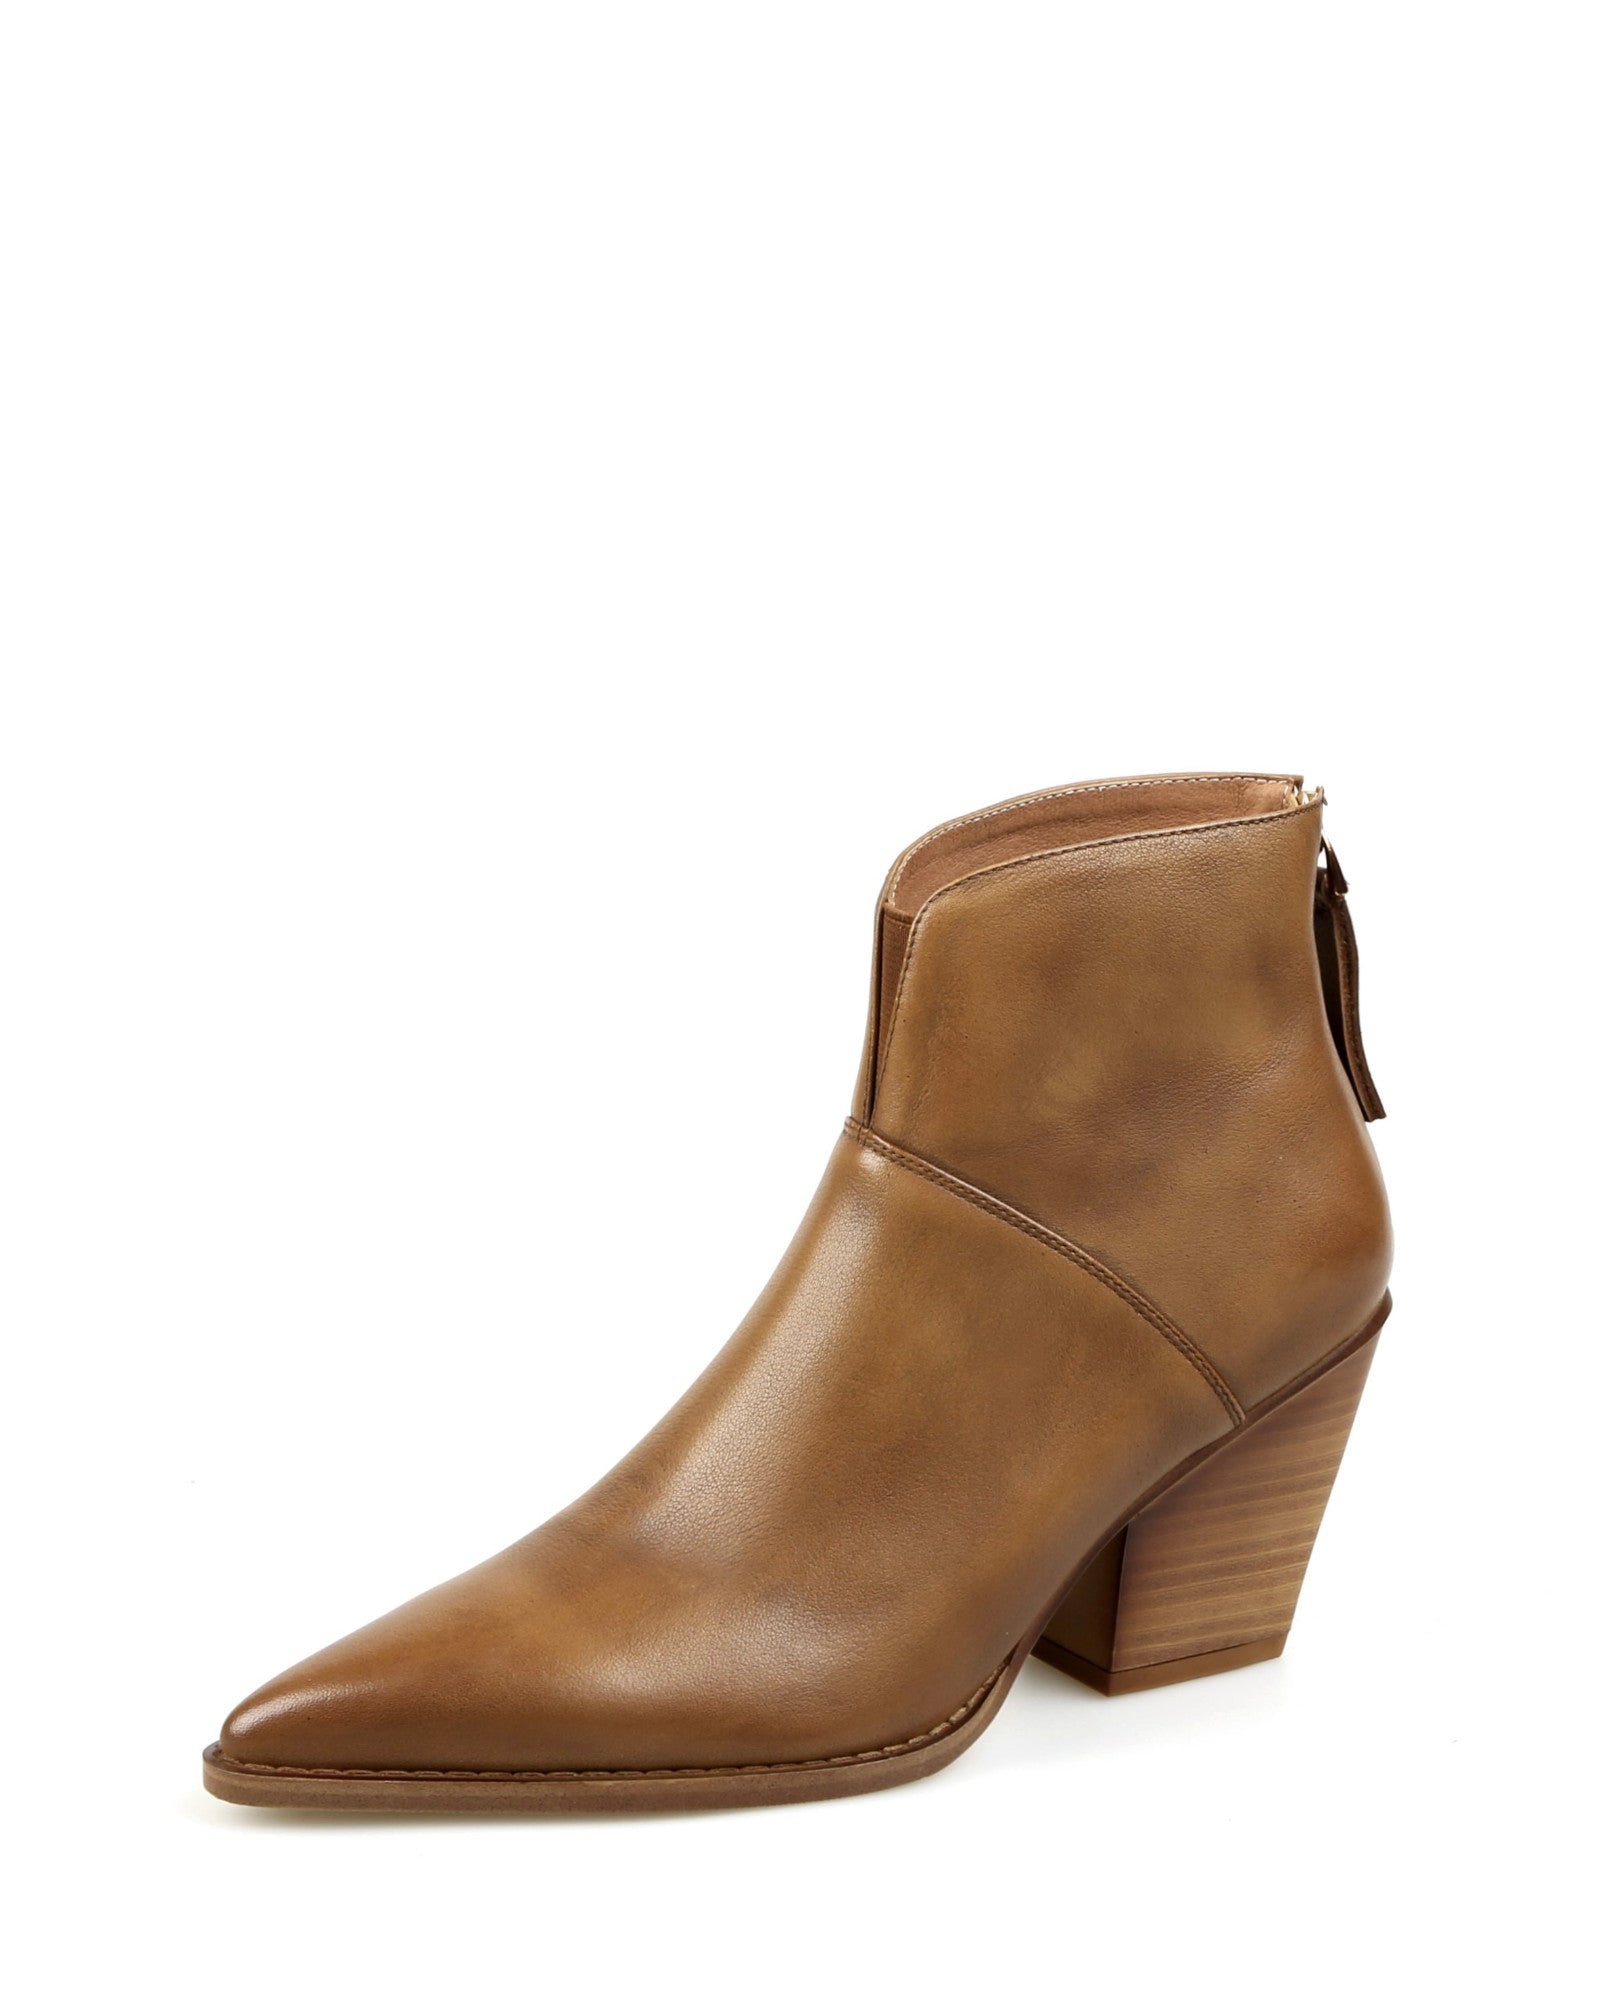 Meru-western-boots-brown-leather